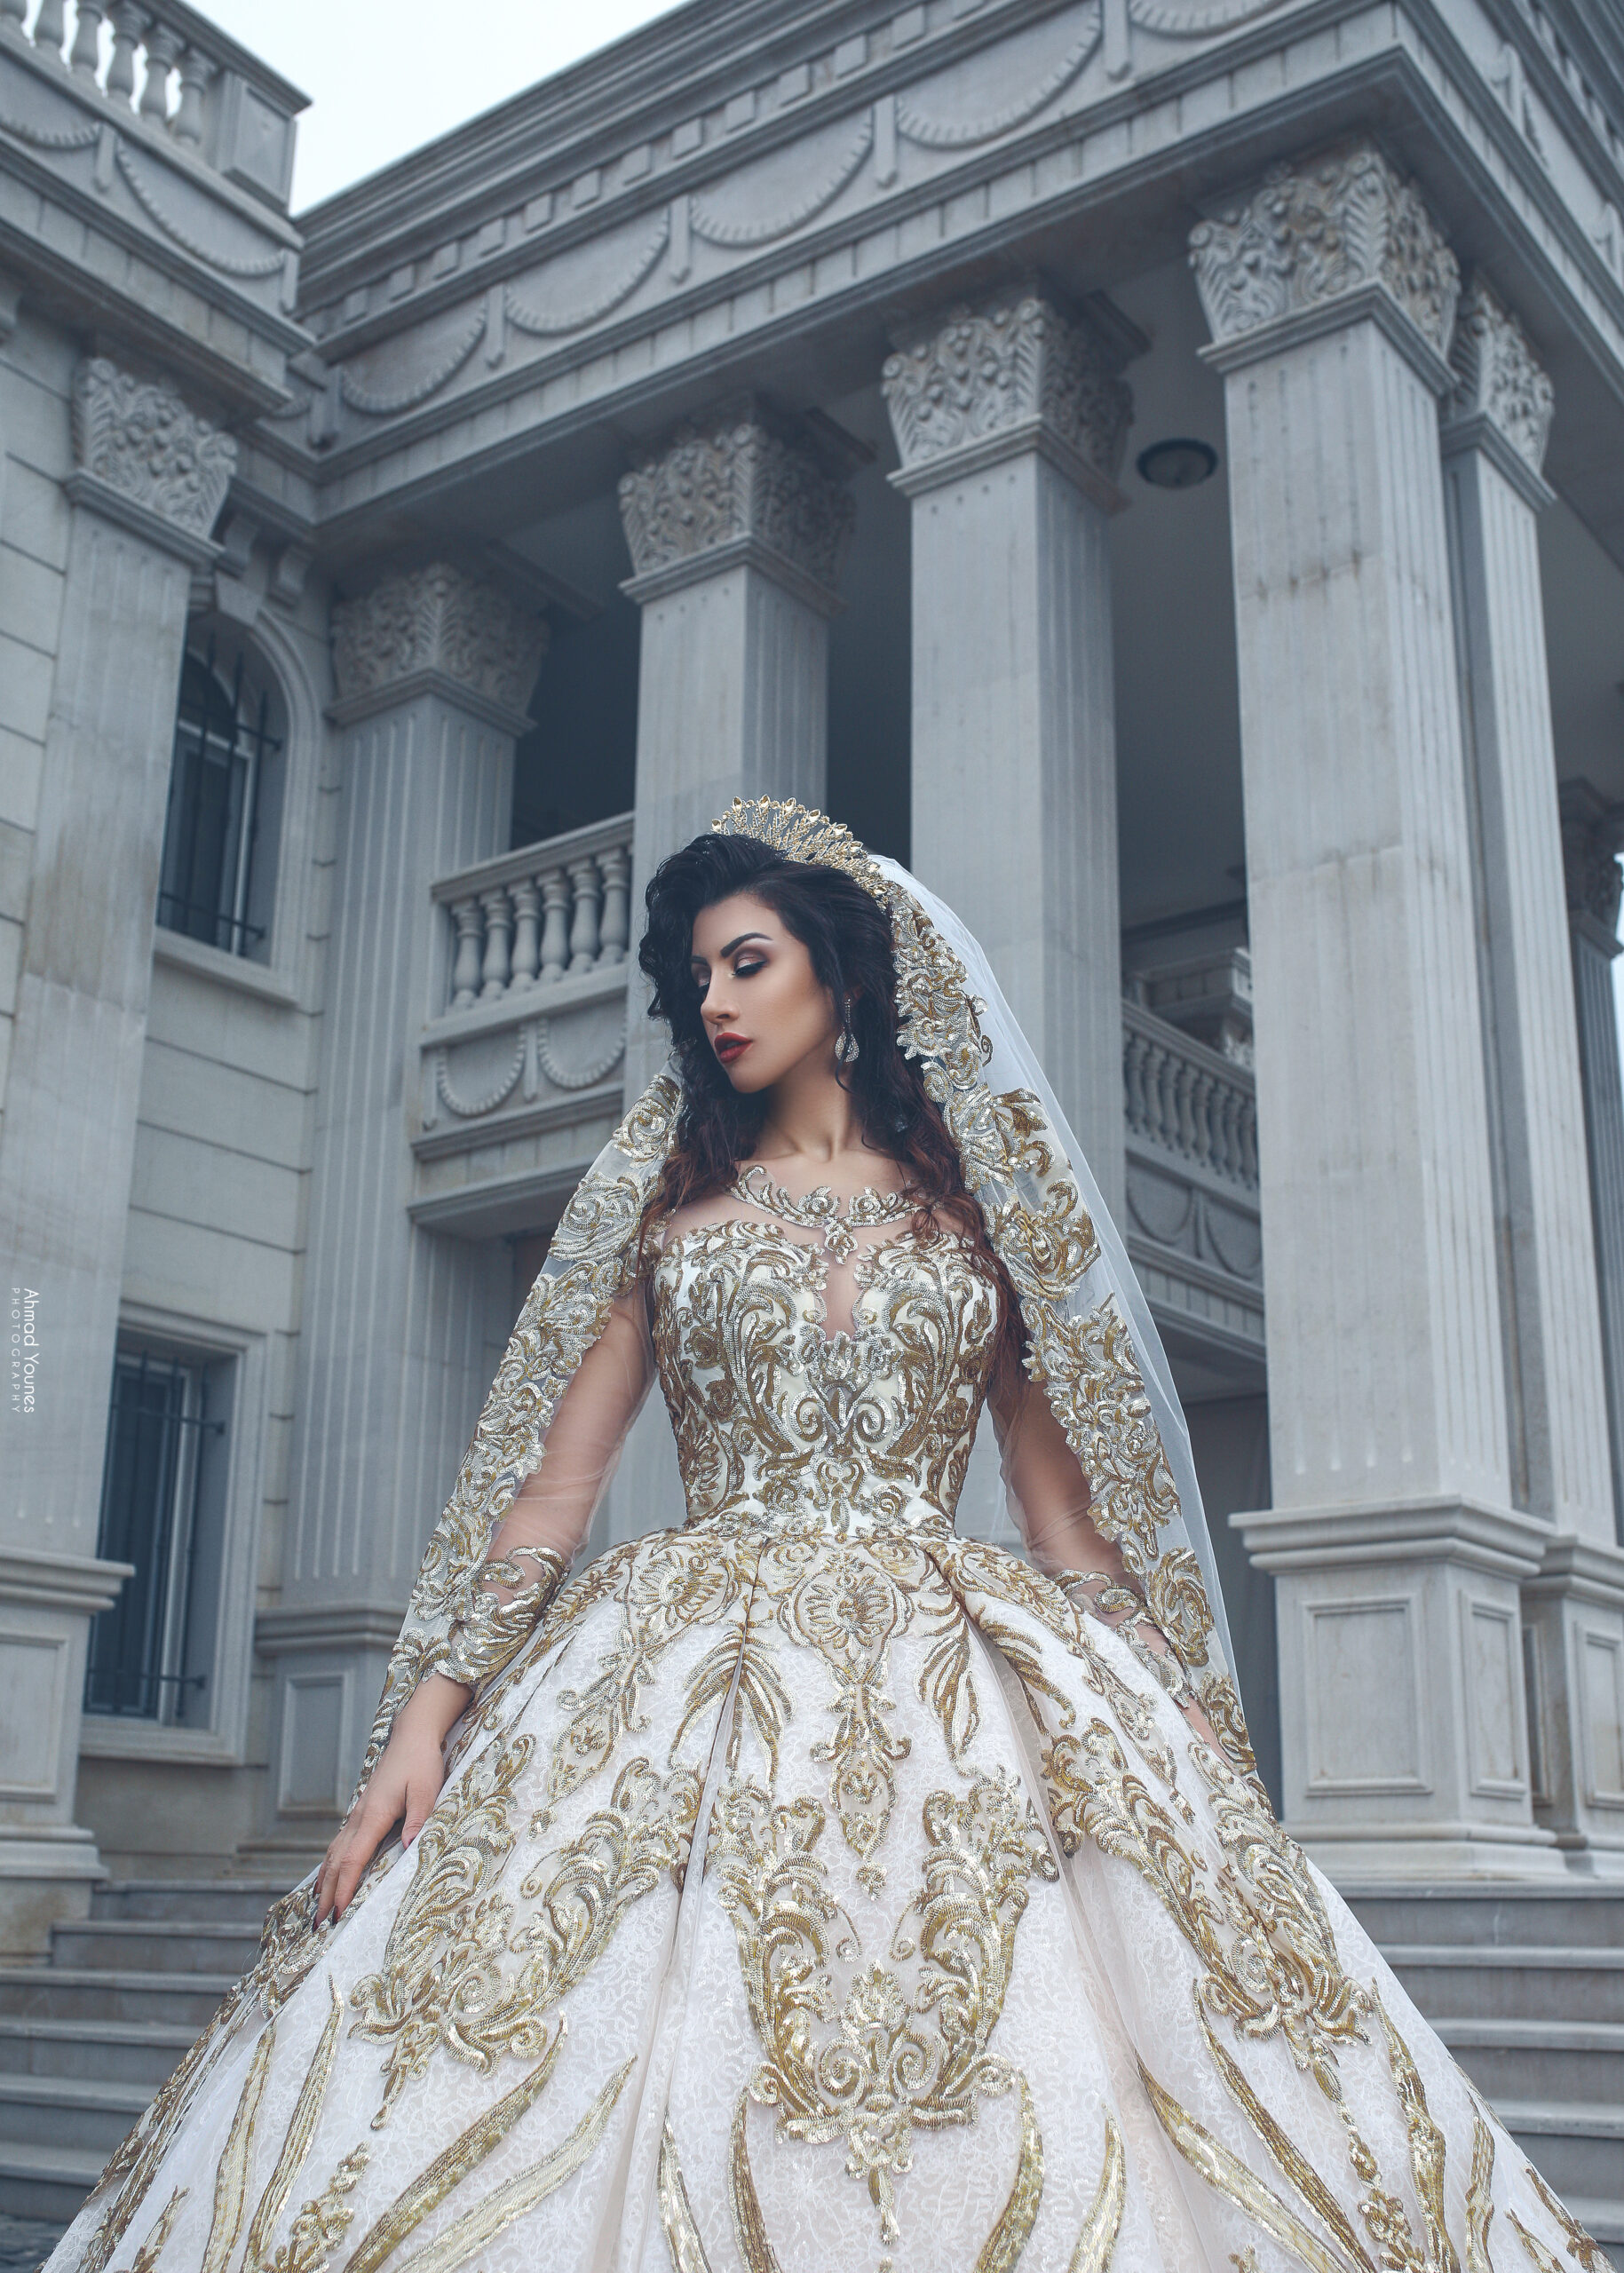 24k genuine gold thread embroidery dress – Zeina Halabi haute couture